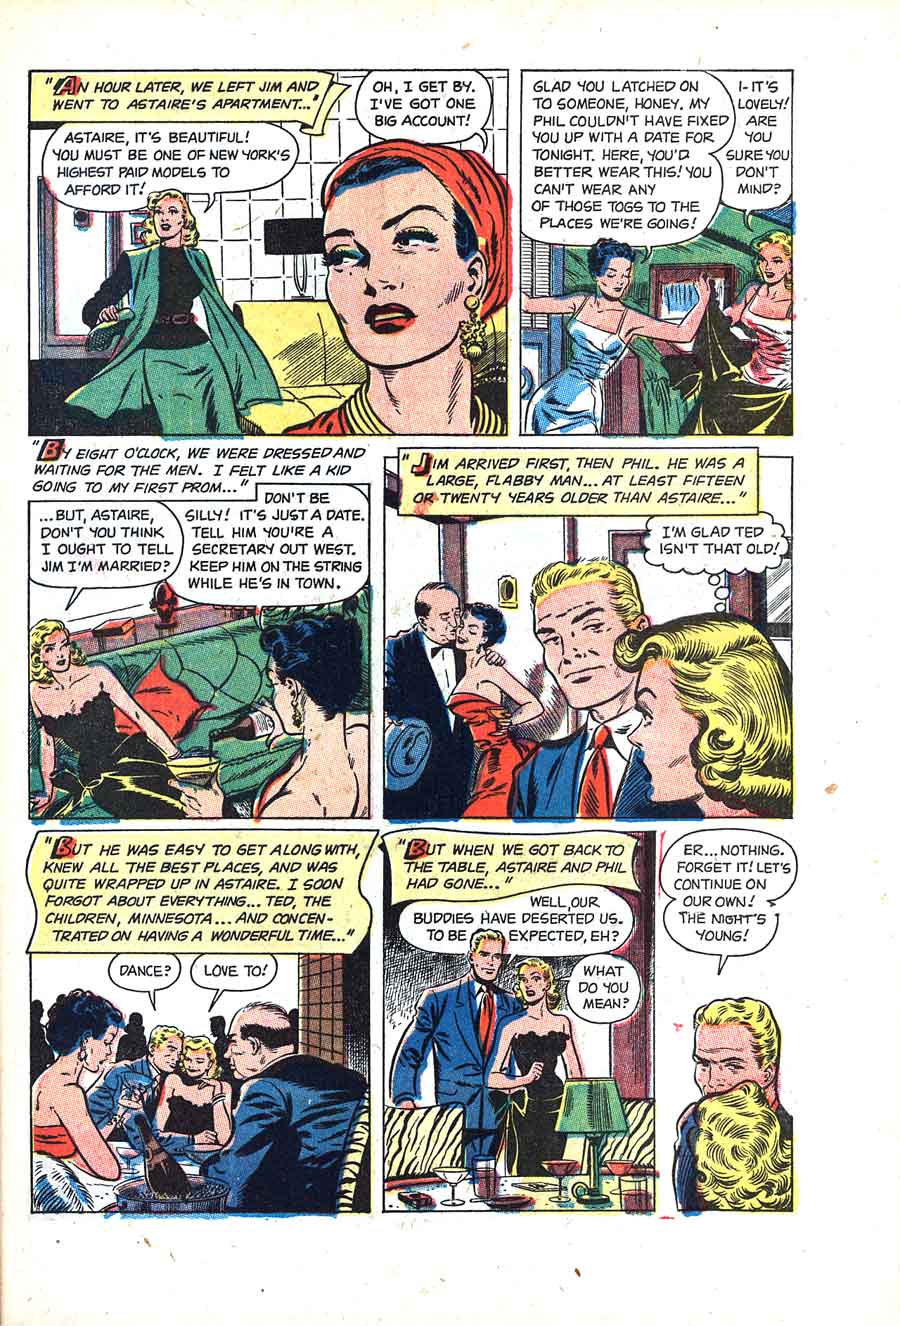 Pictorial Romances #21 st. john golden age 1950s romance comic book page art by Matt Baker